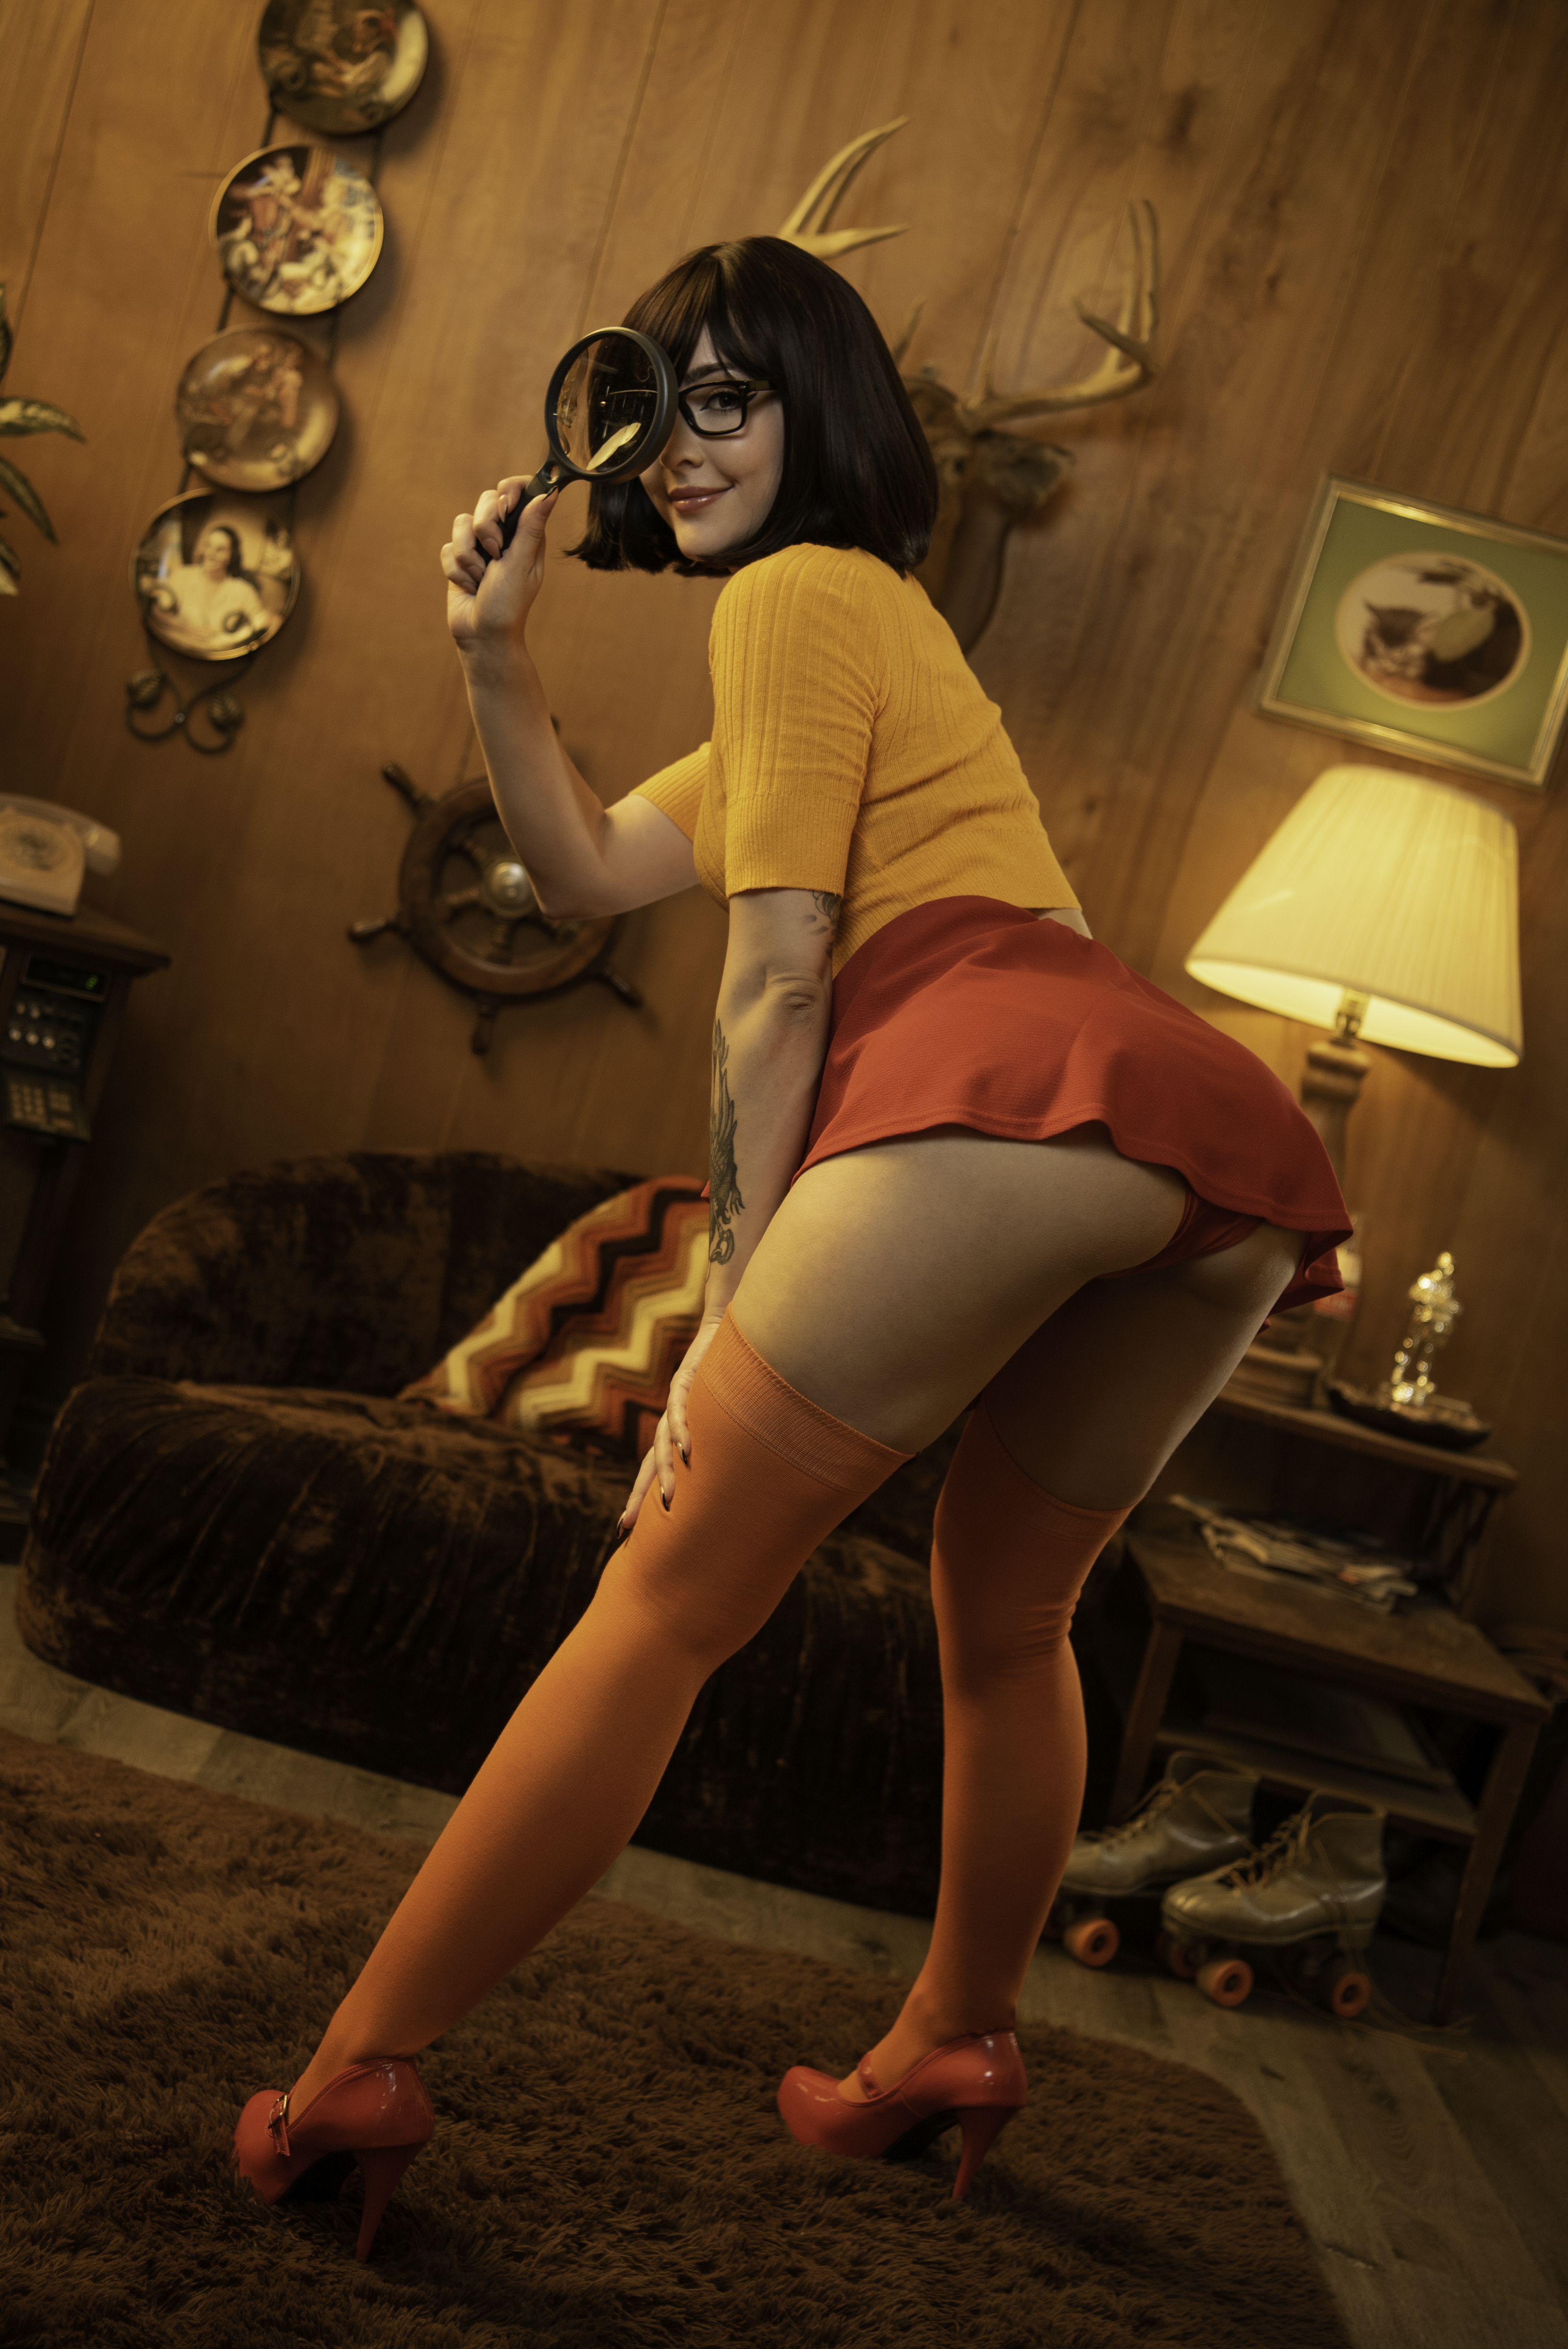 People 3343x5008 Isabel Luxlo women model cosplay vintage Velma Dinkley Scooby-Doo women indoors inked girls ass upskirt panties stockings high heels thick ass the gap red panties bent over